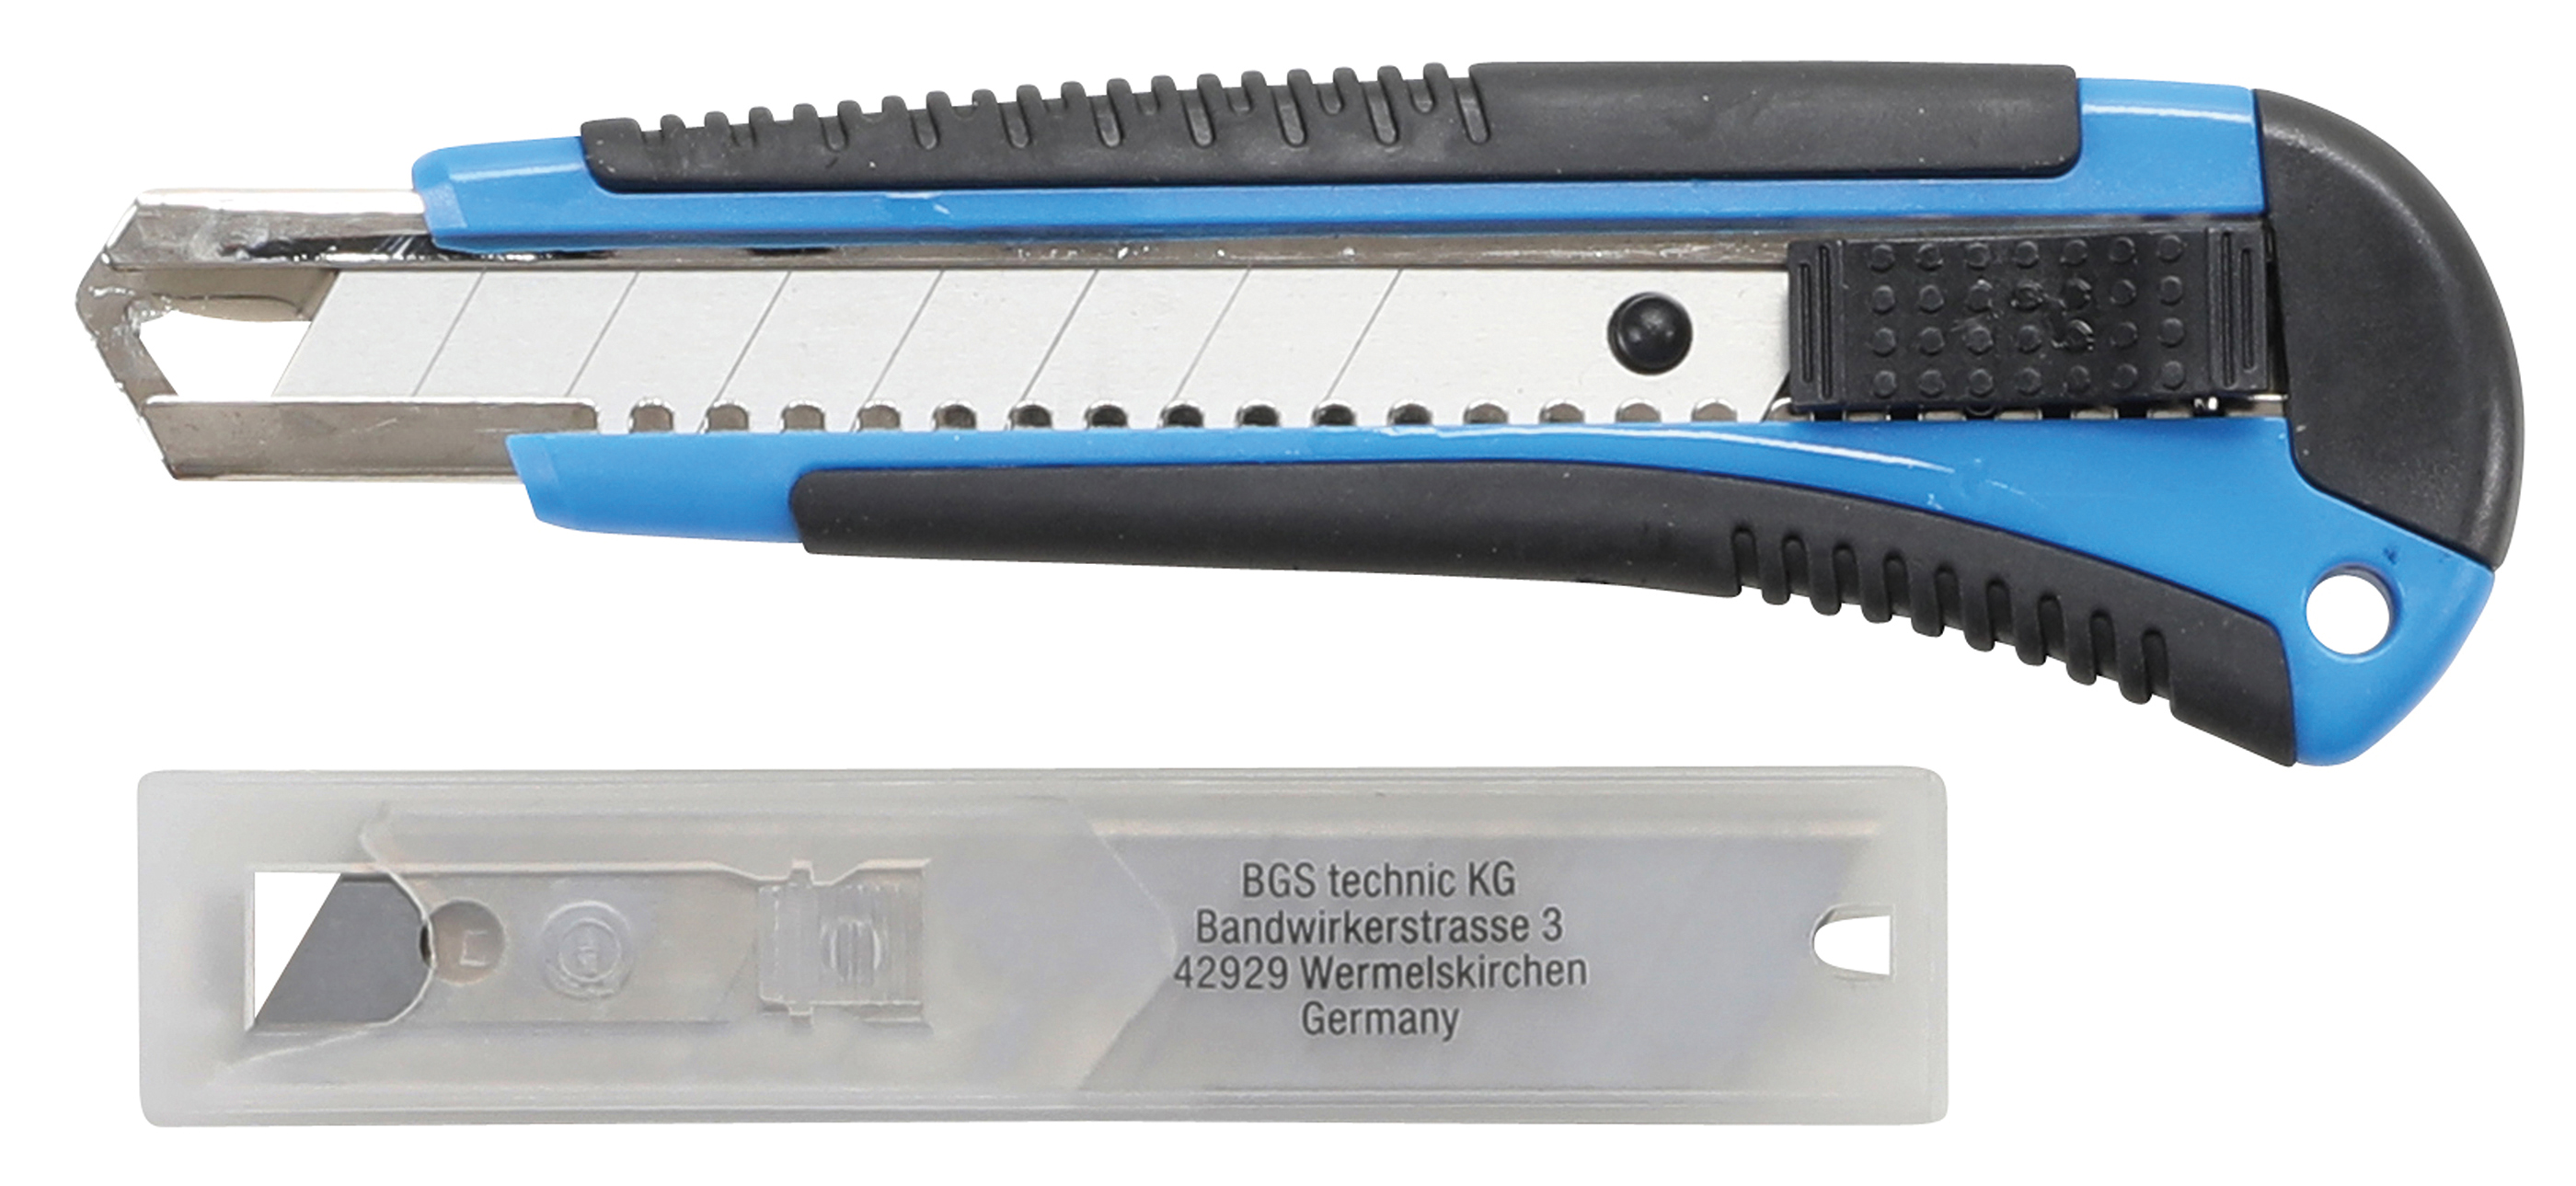 BGS 7955 Cutter cu lama 18mm retractabila, extra heavy duty + set lame de rezerva